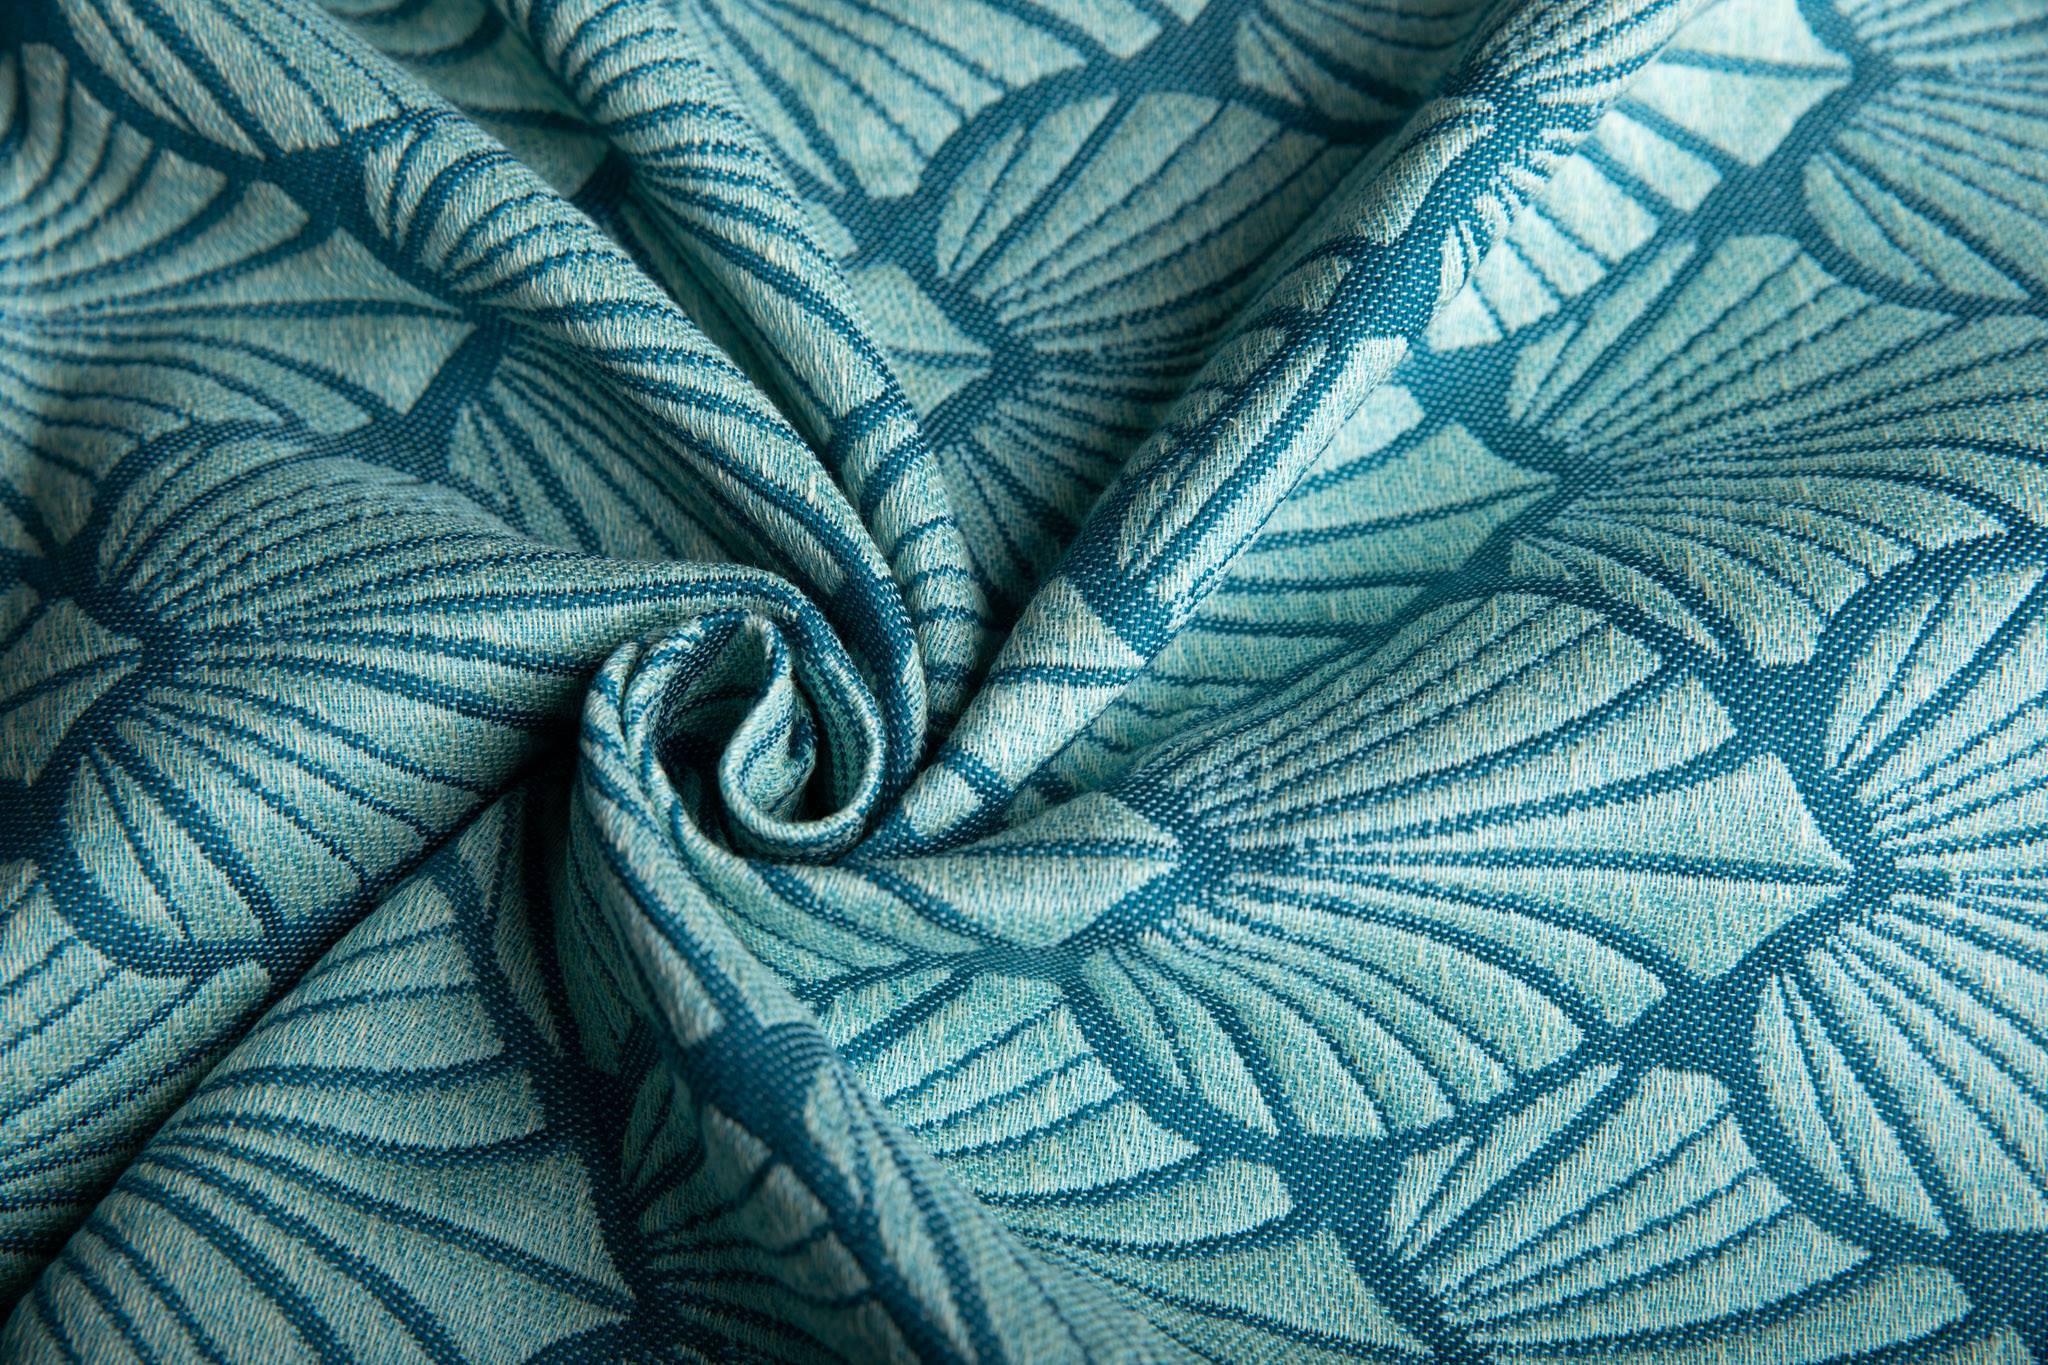 Linuschka Ipomee The Enchantress Wrap (japanese silk) Image